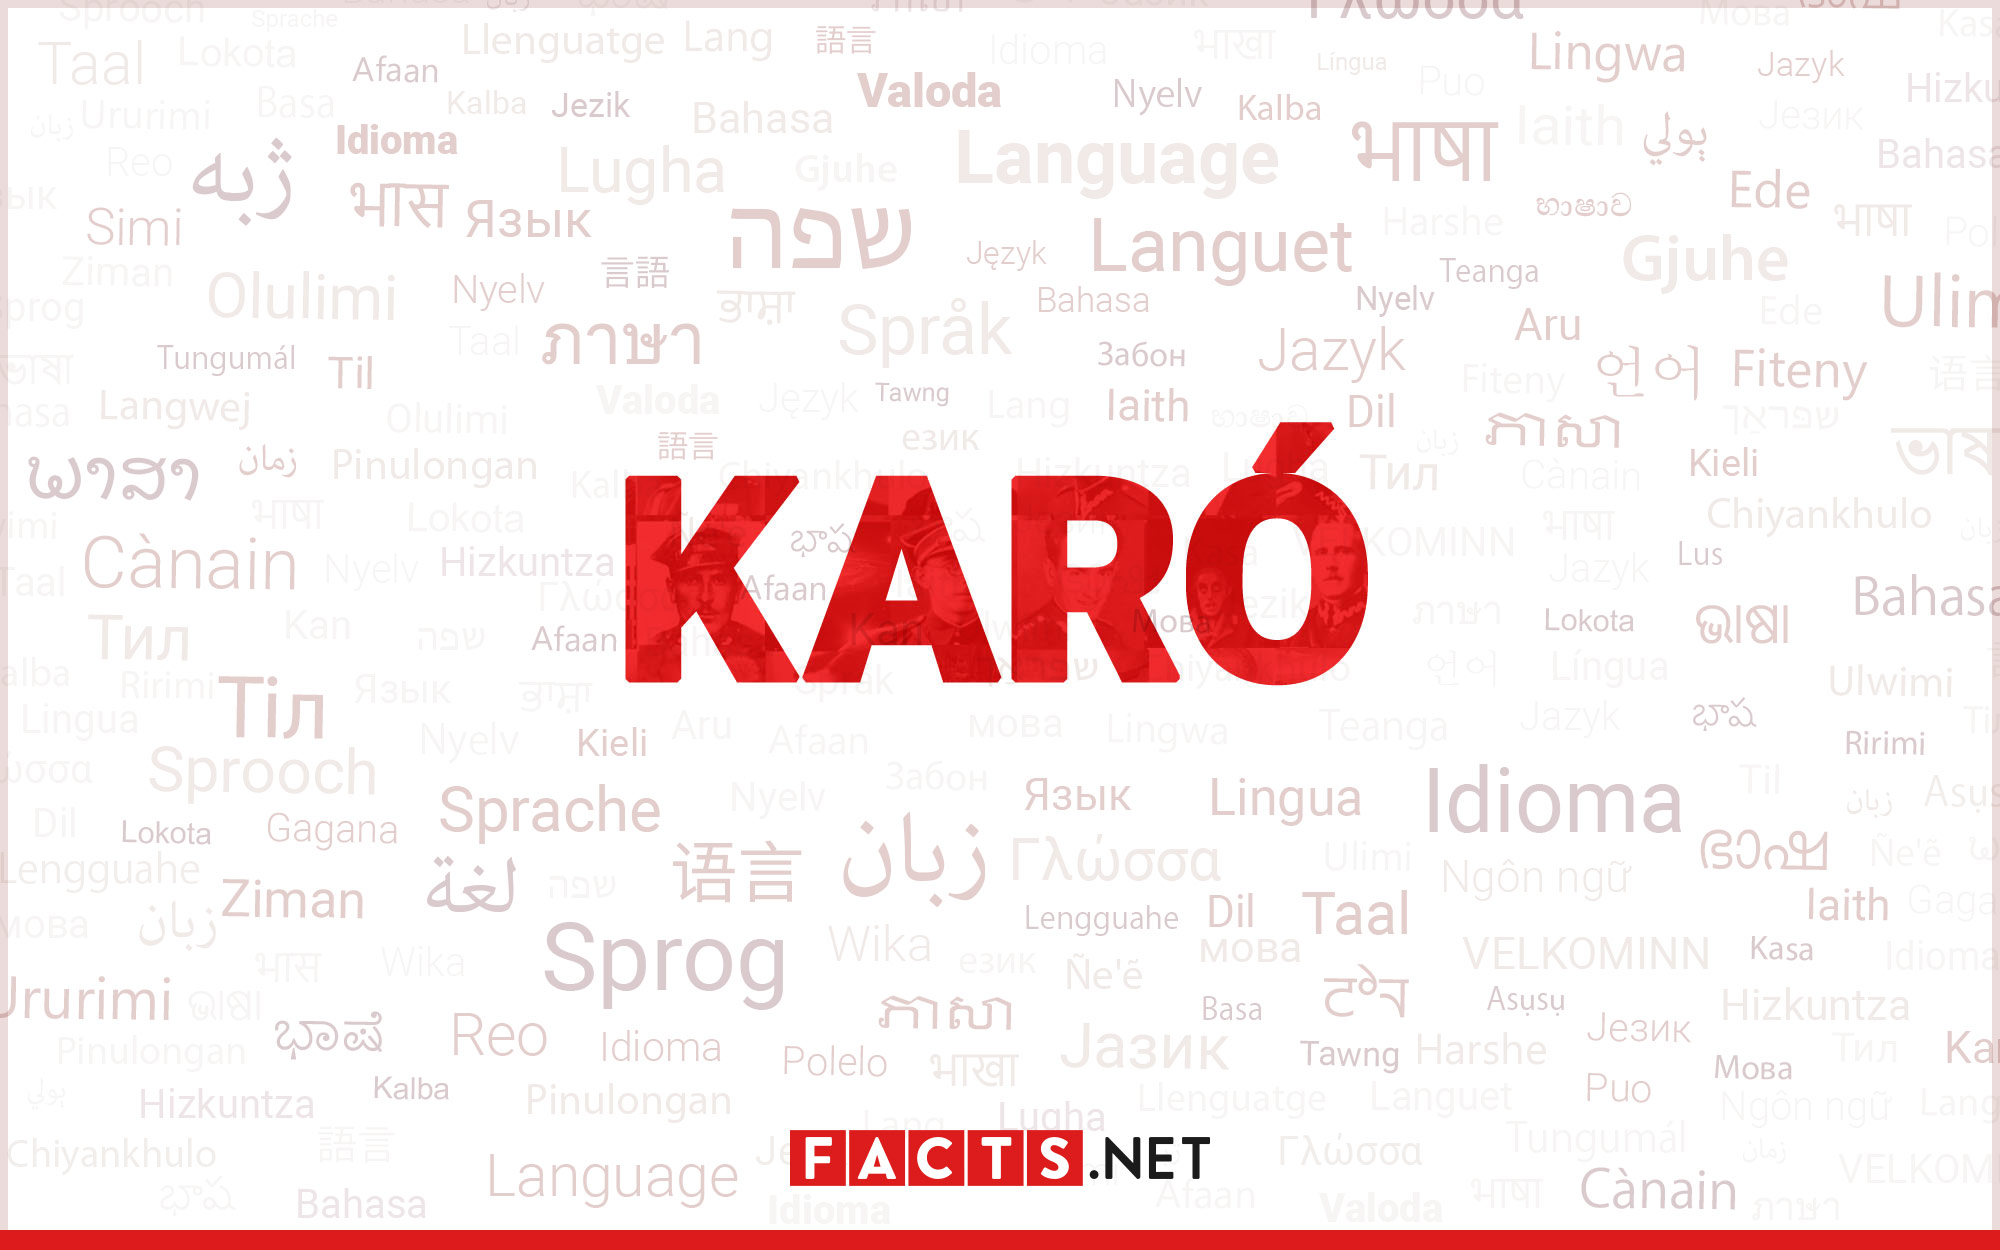 17-astounding-facts-about-karo